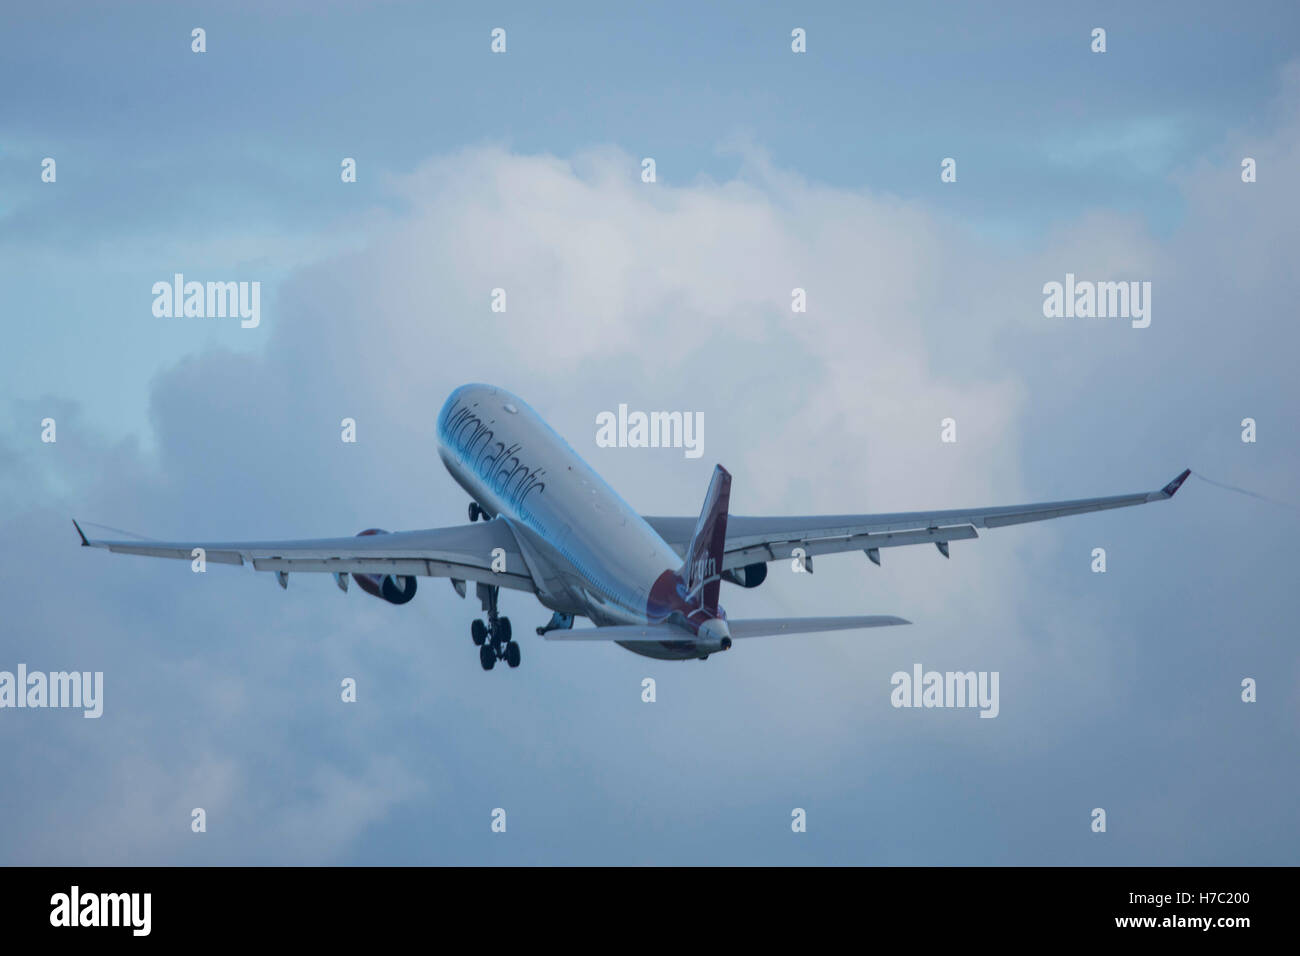 Virgin Atlantic A330 Taking Off Stock Photo